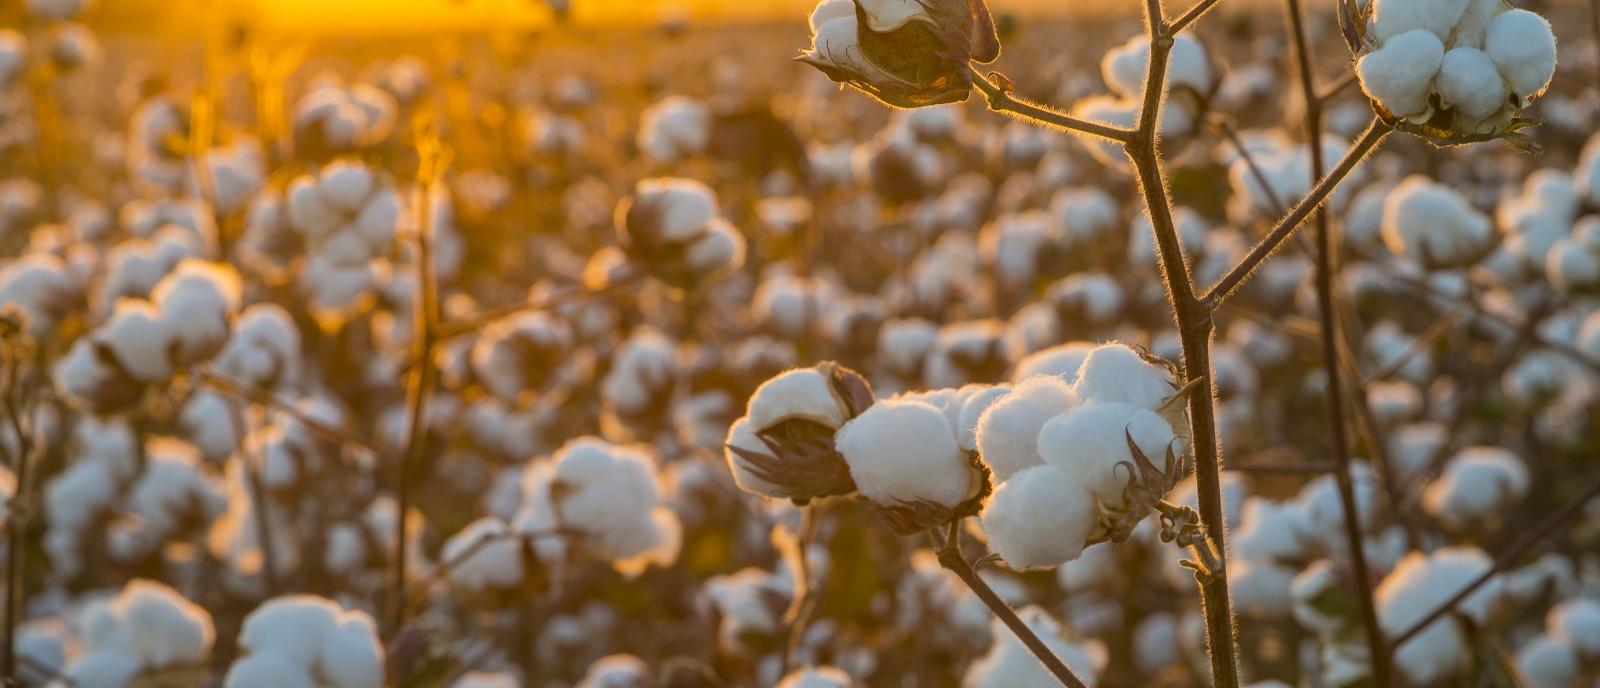 Cotton field at sunset